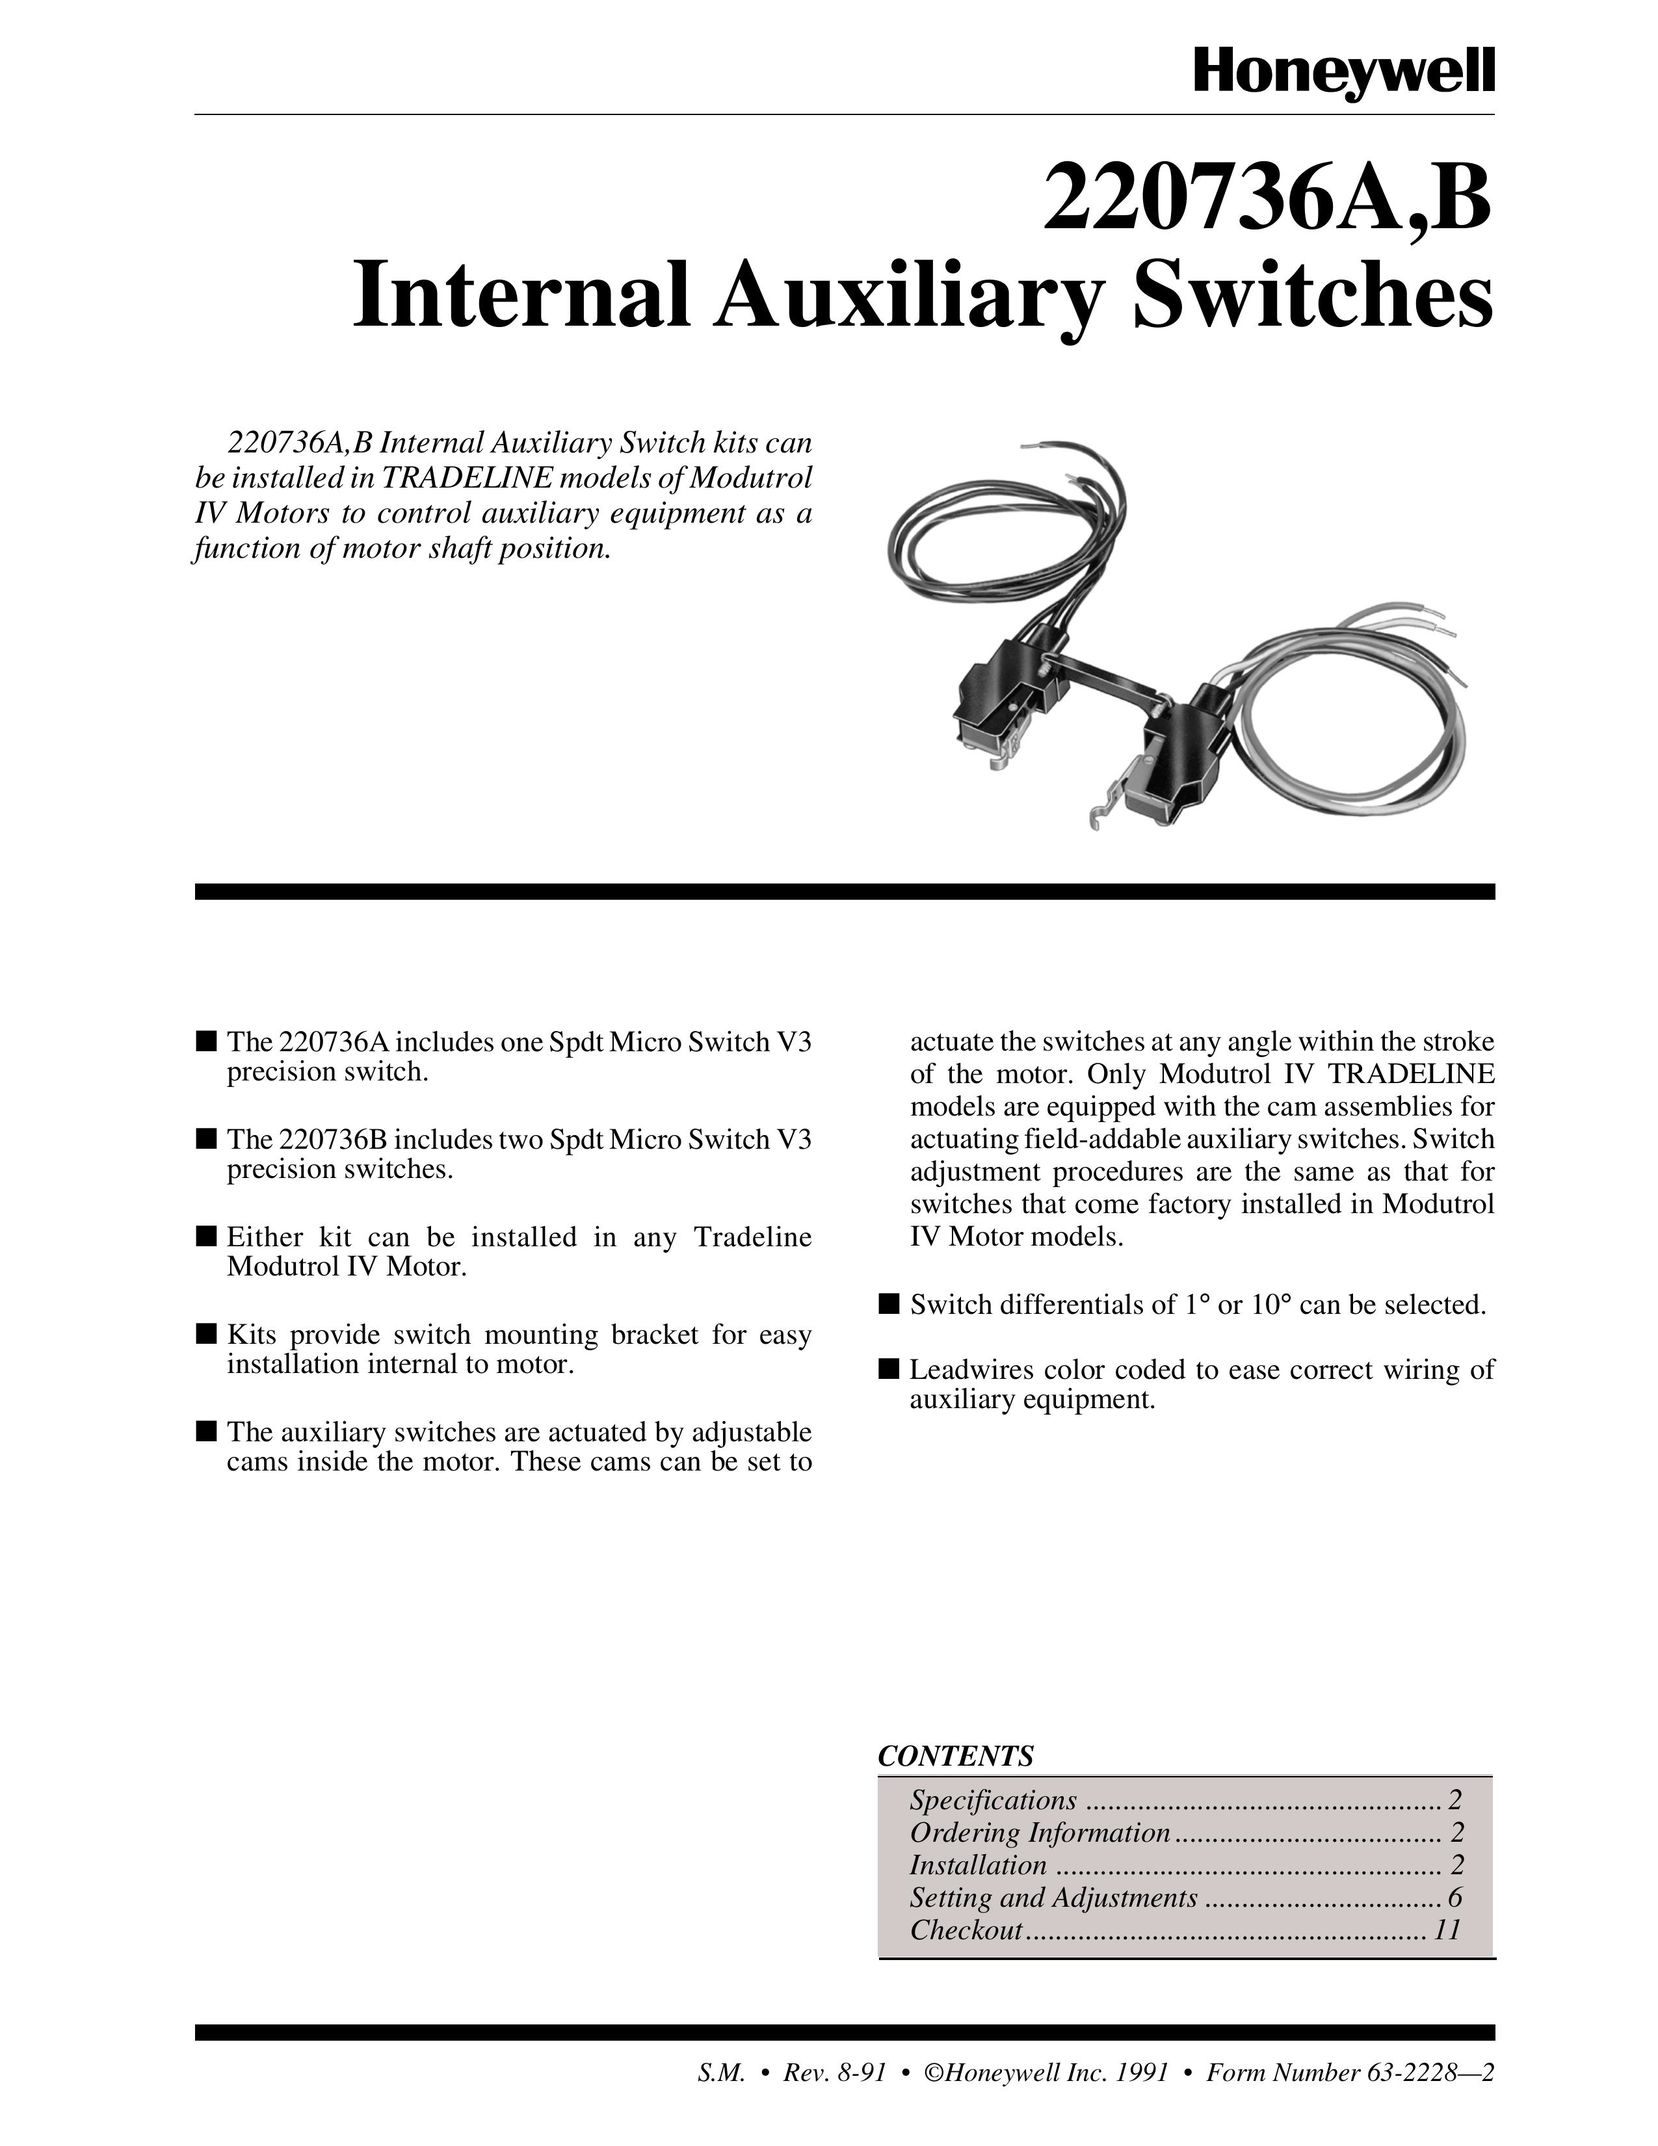 Honeywell 220736B Switch User Manual